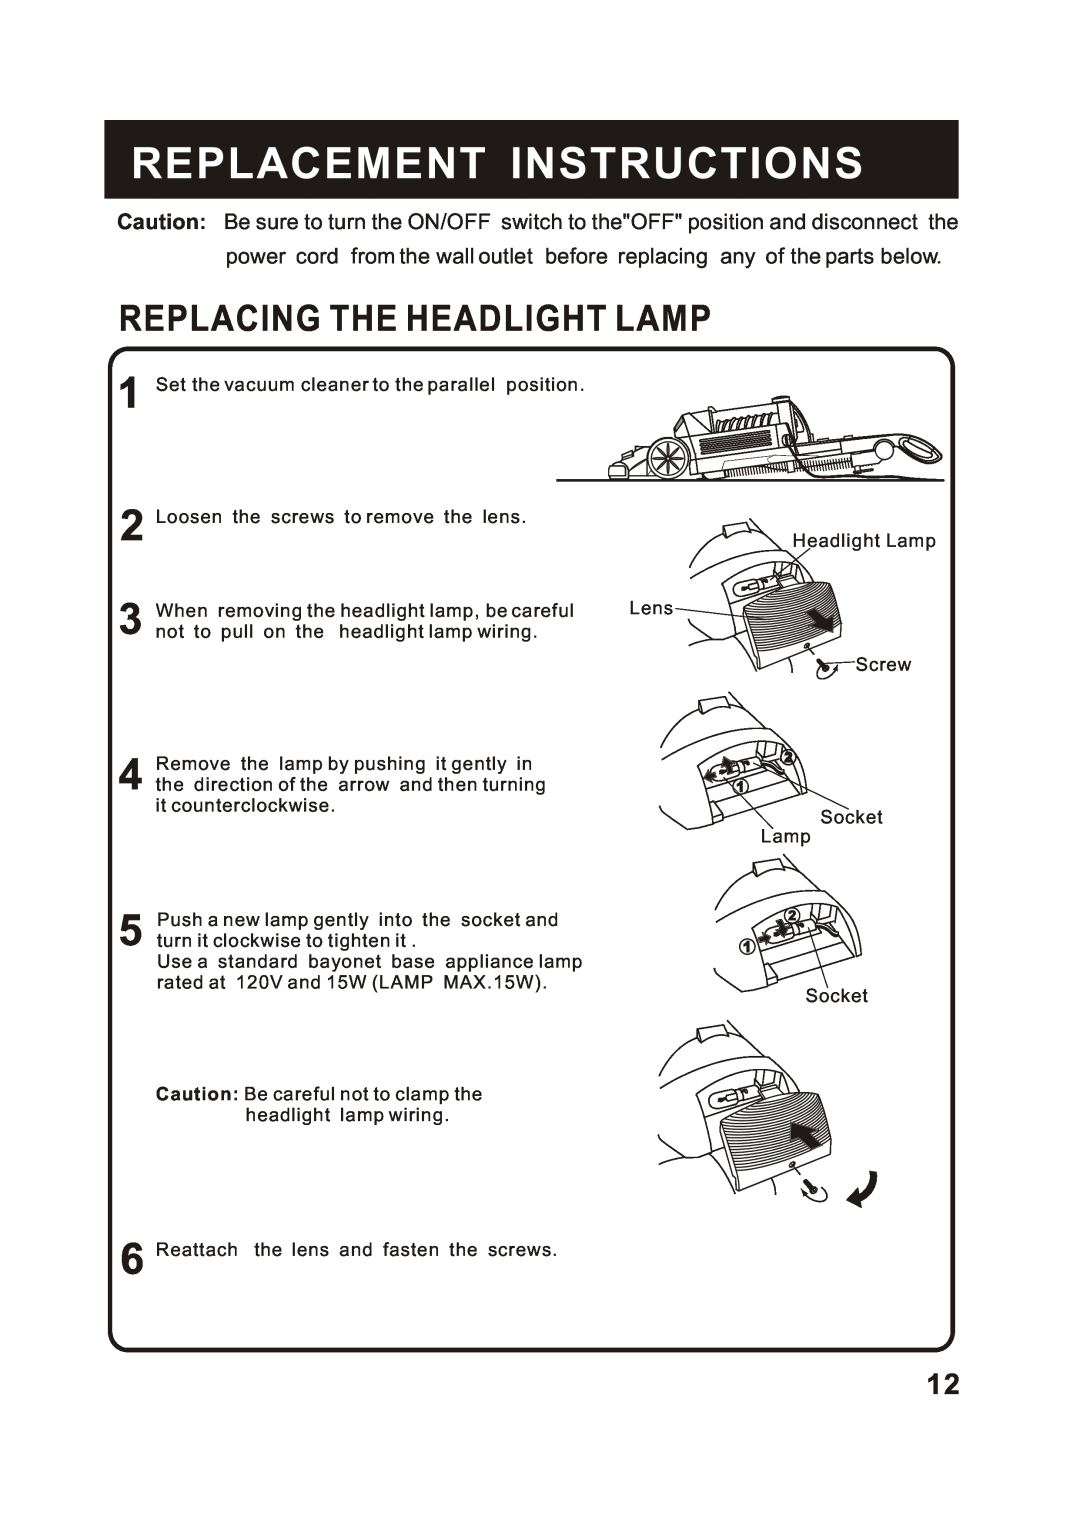 Fantom Vacuum FM760K instruction manual Replacement Instructions, Replacing The Headlight Lamp 